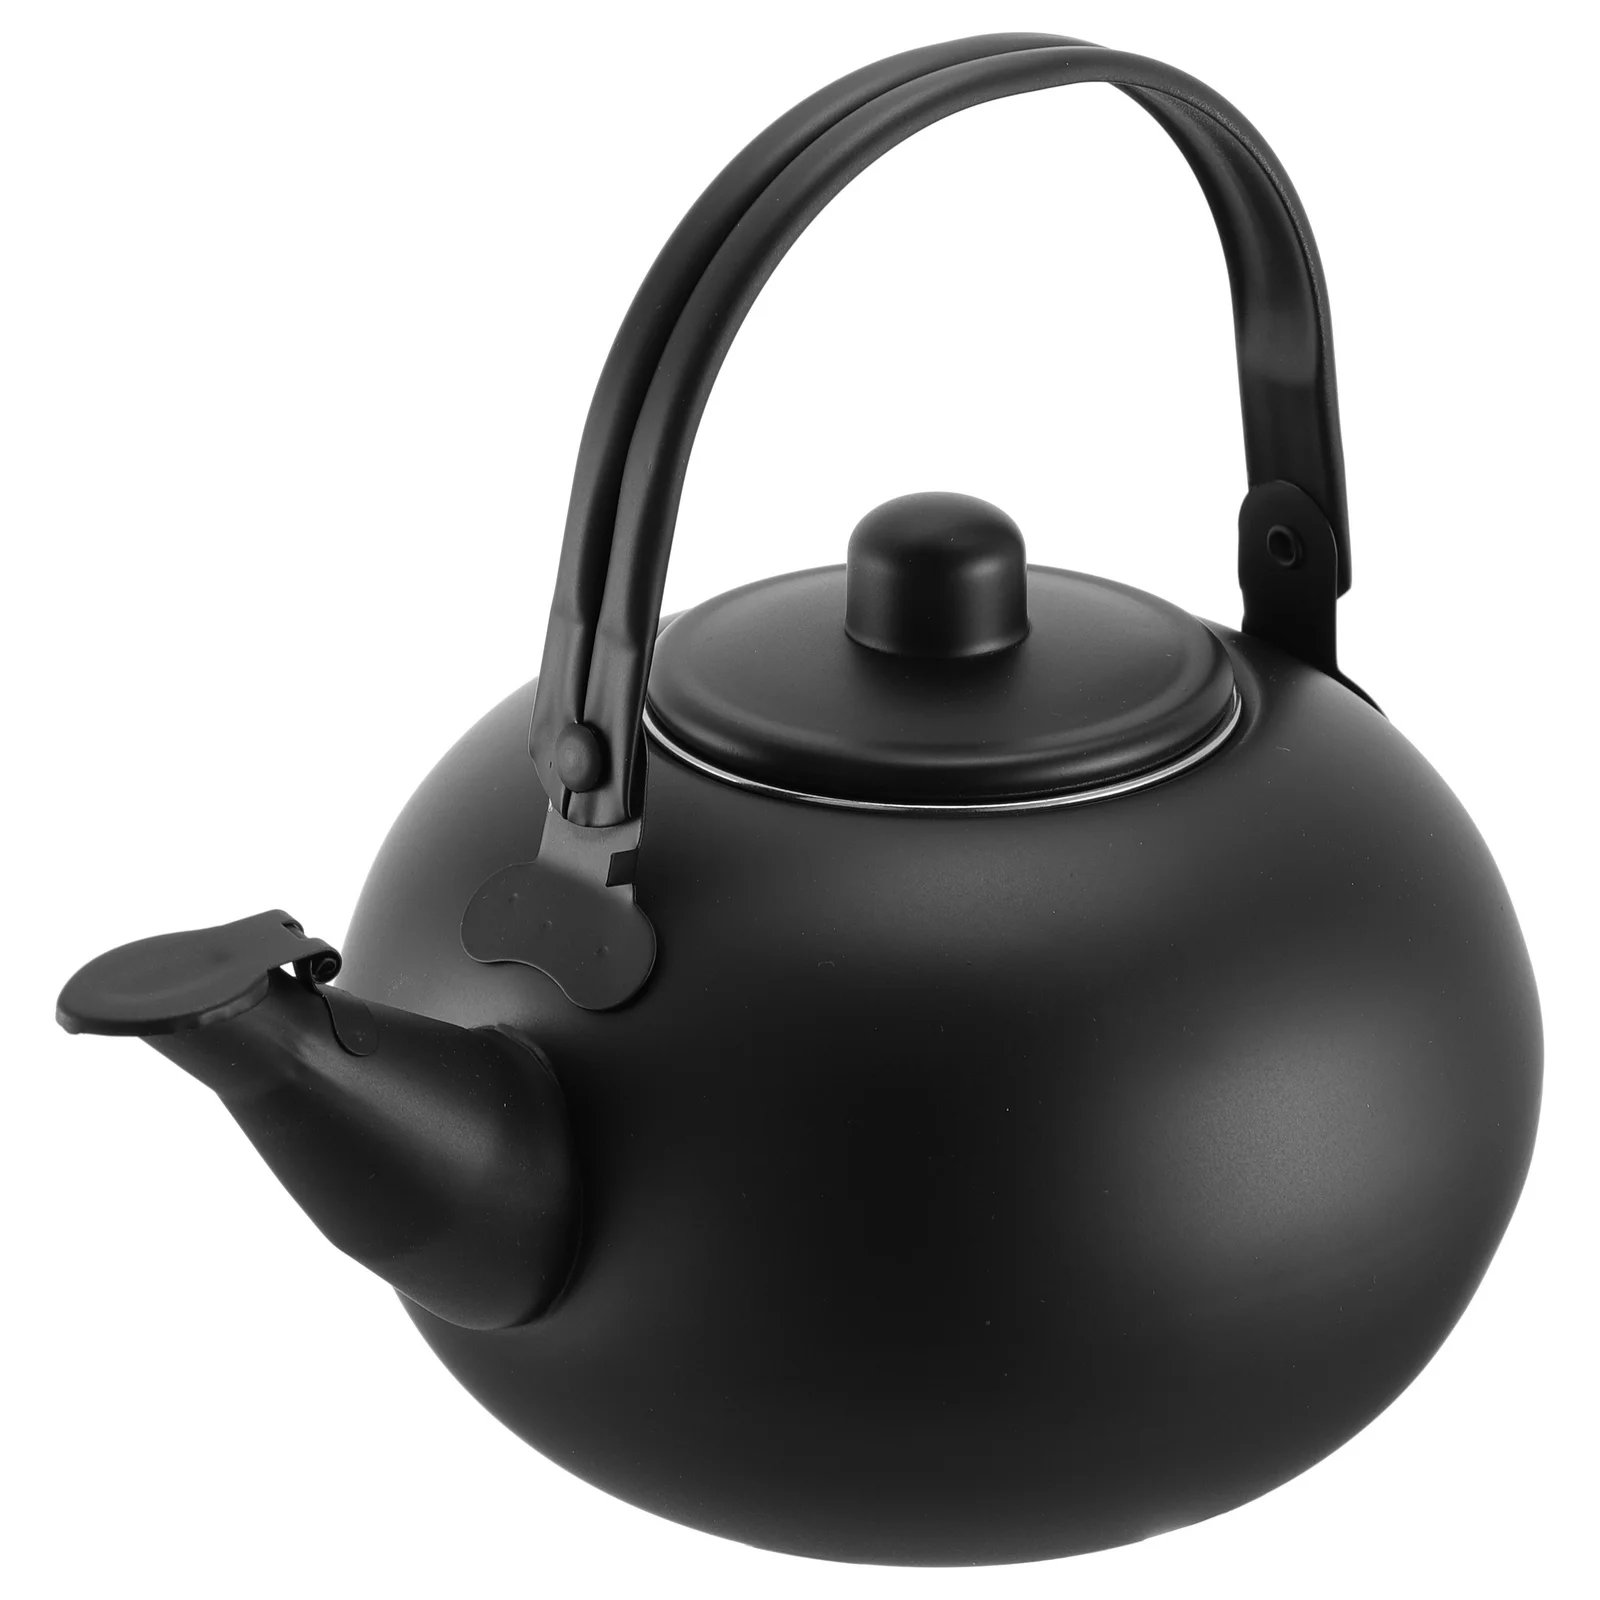 

Gas Water Heater Pot Teapot 19X16X13CM Boiling Kettle Household Teakettle Black Stainless Steel Make